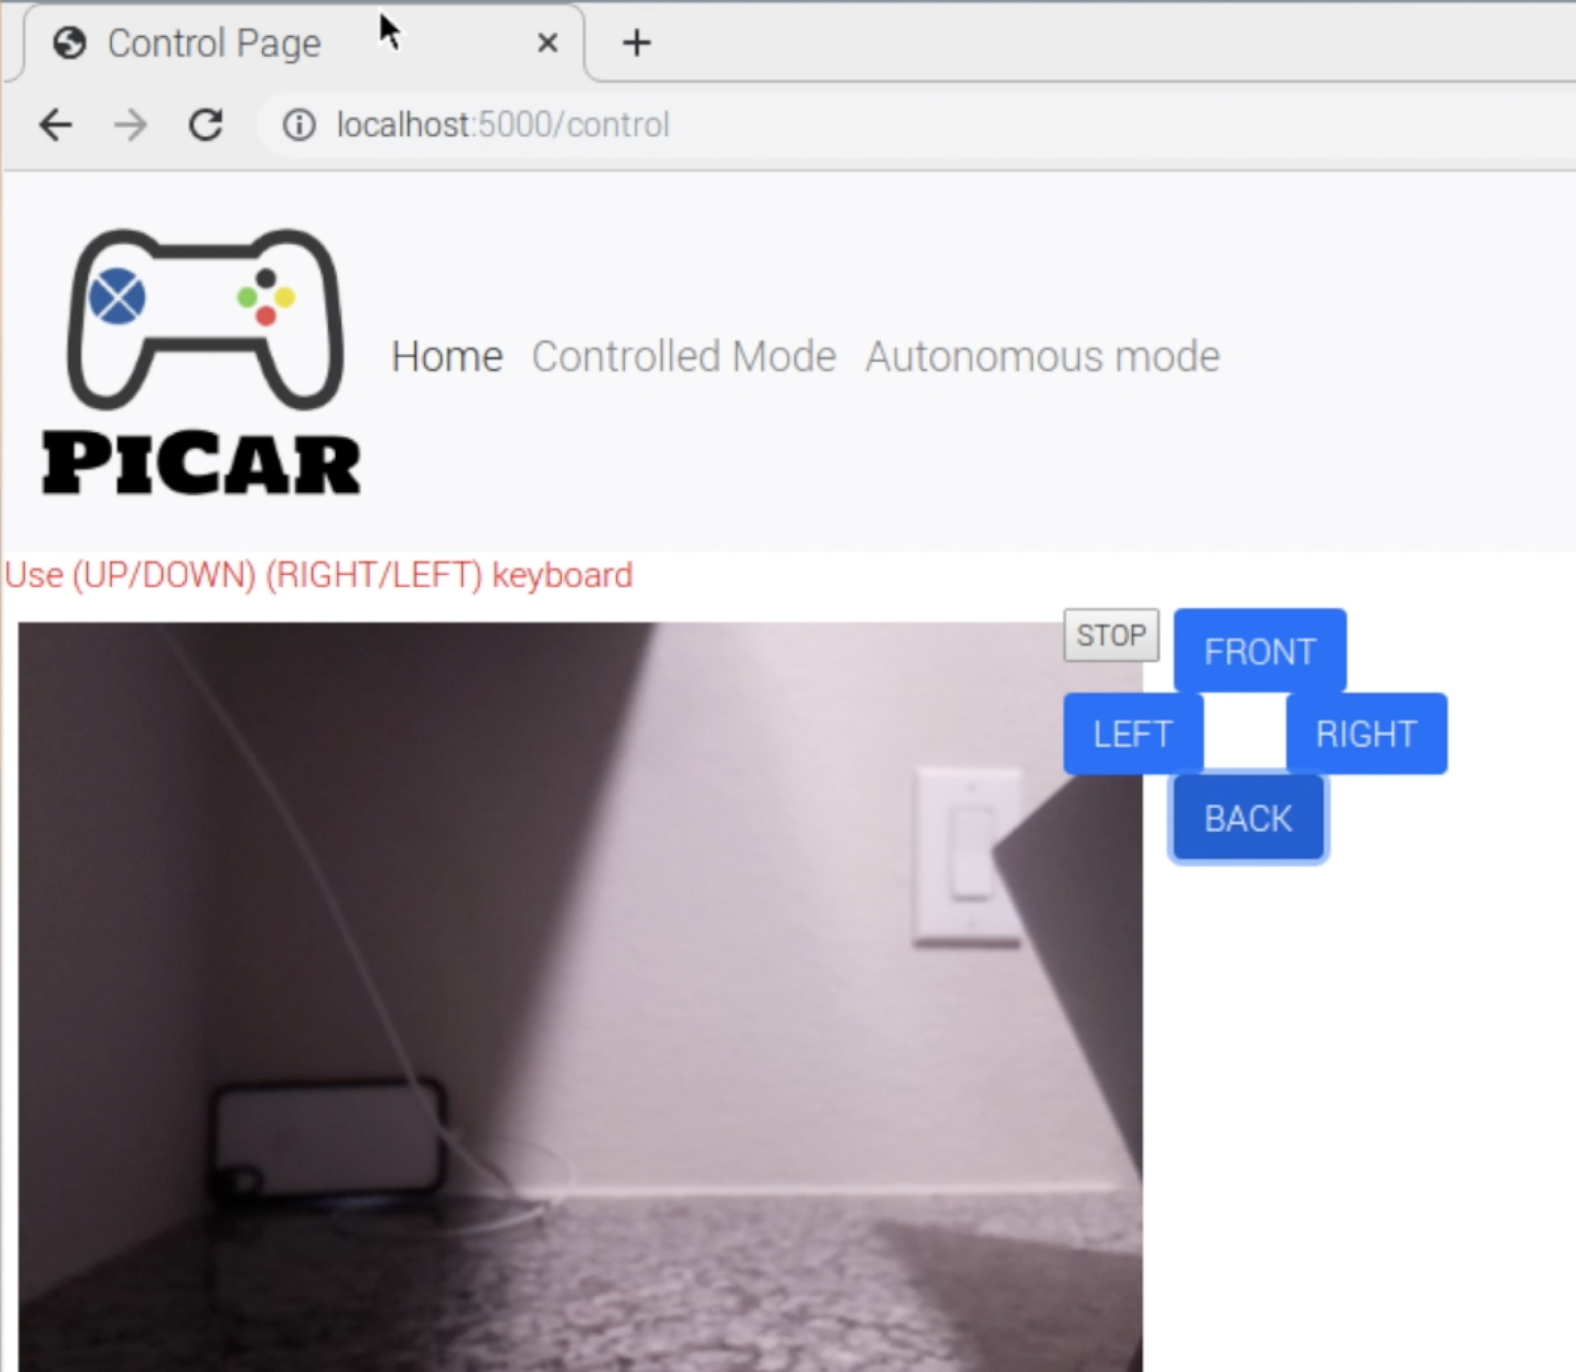 PiCar's Control Page